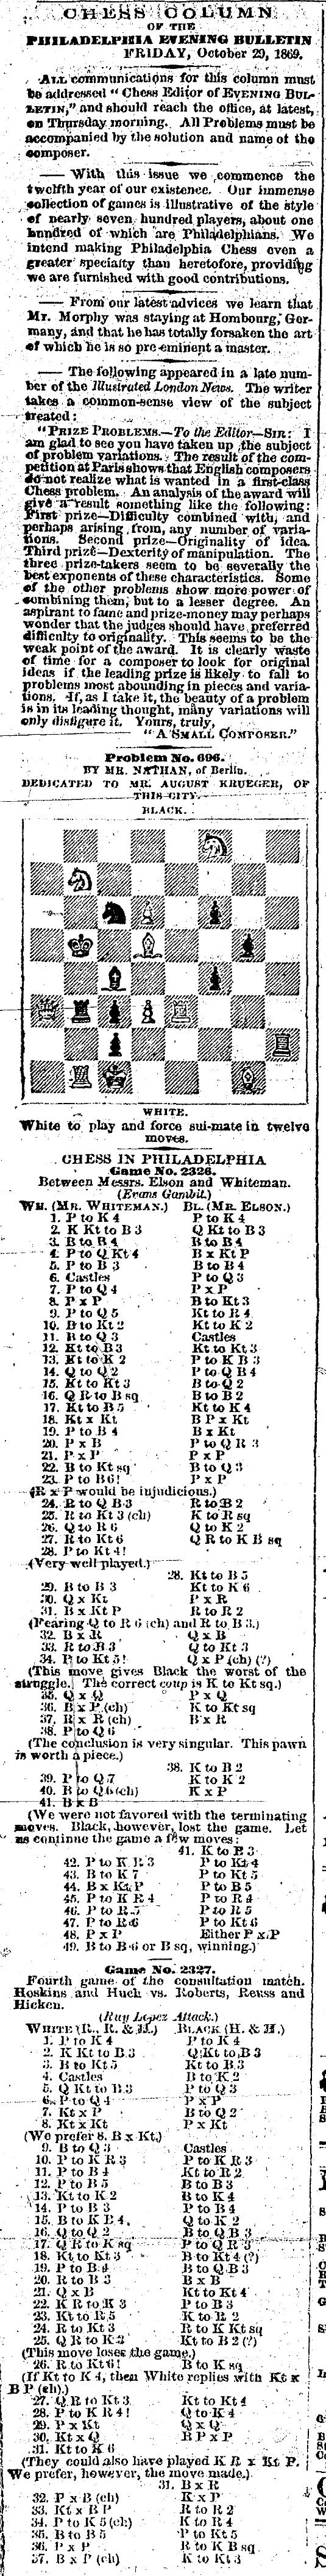 1869.10.29-01 Philadelphia Daily Evening Bulletin.jpg